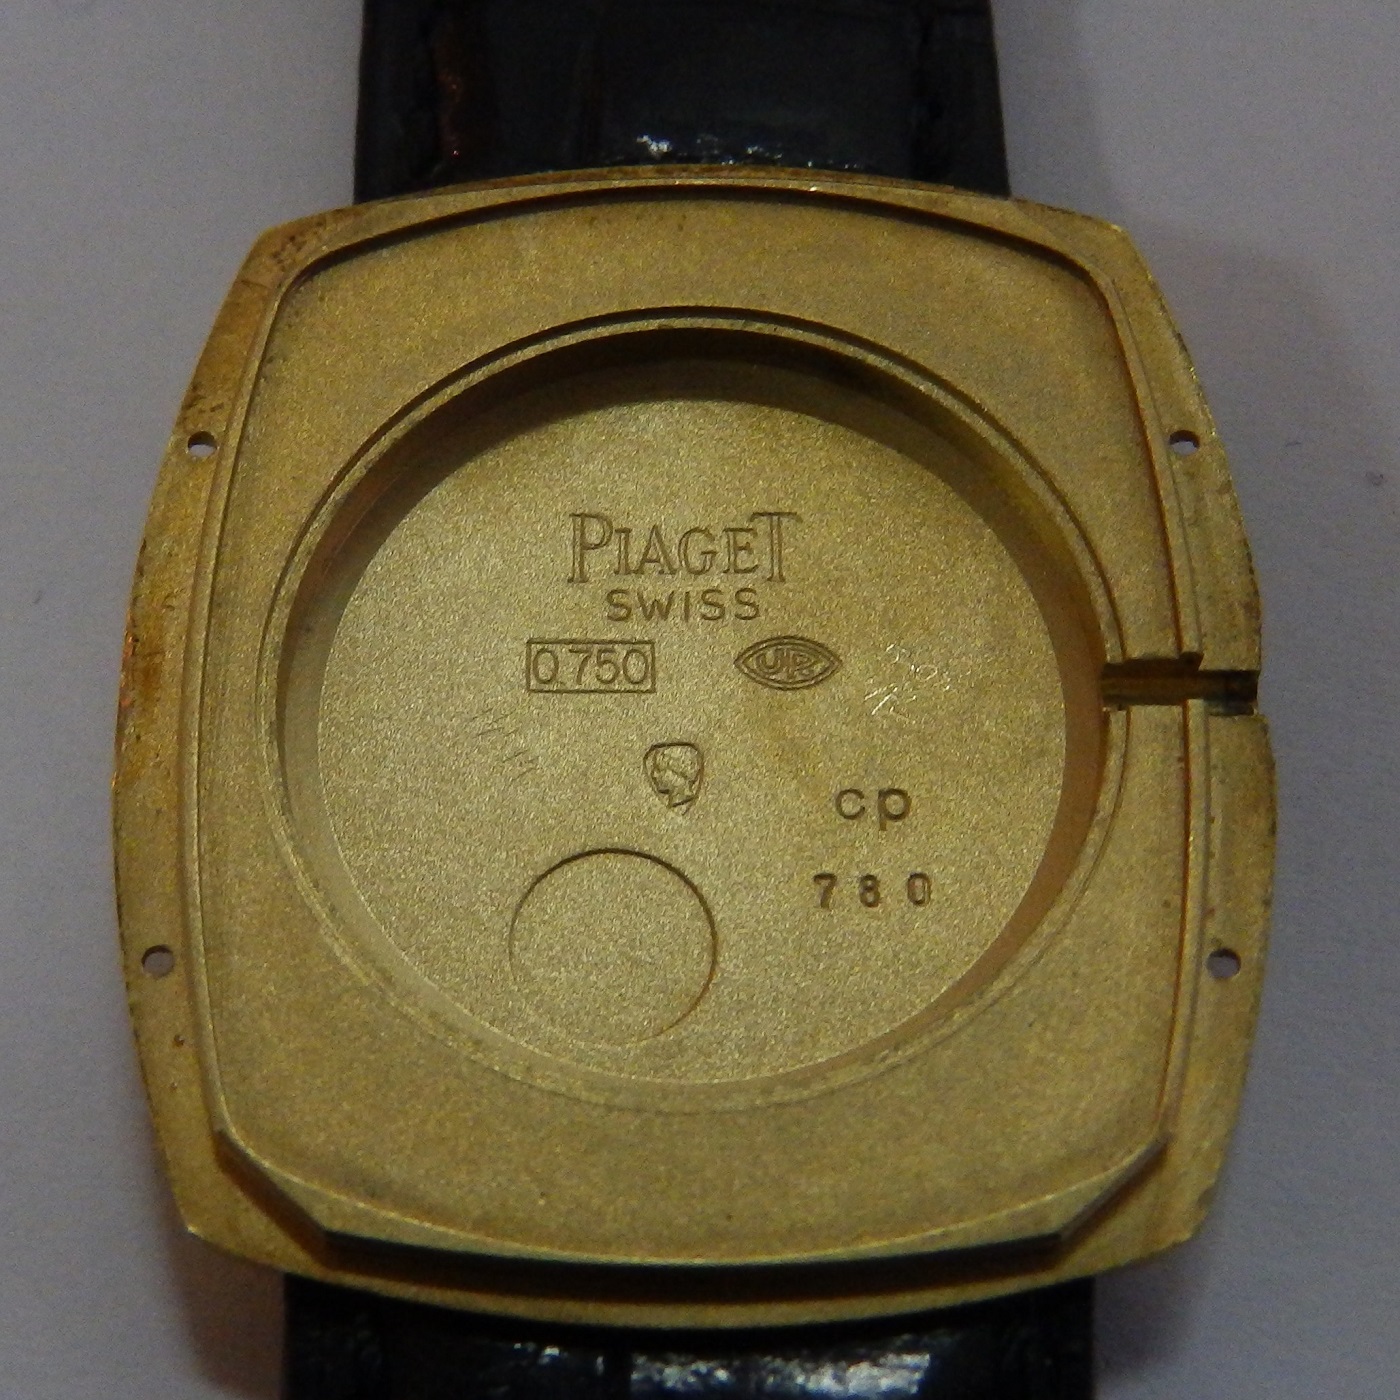 Piaget. Reloj de Pulsera para caballero.Esfera negra. Ca. 1957